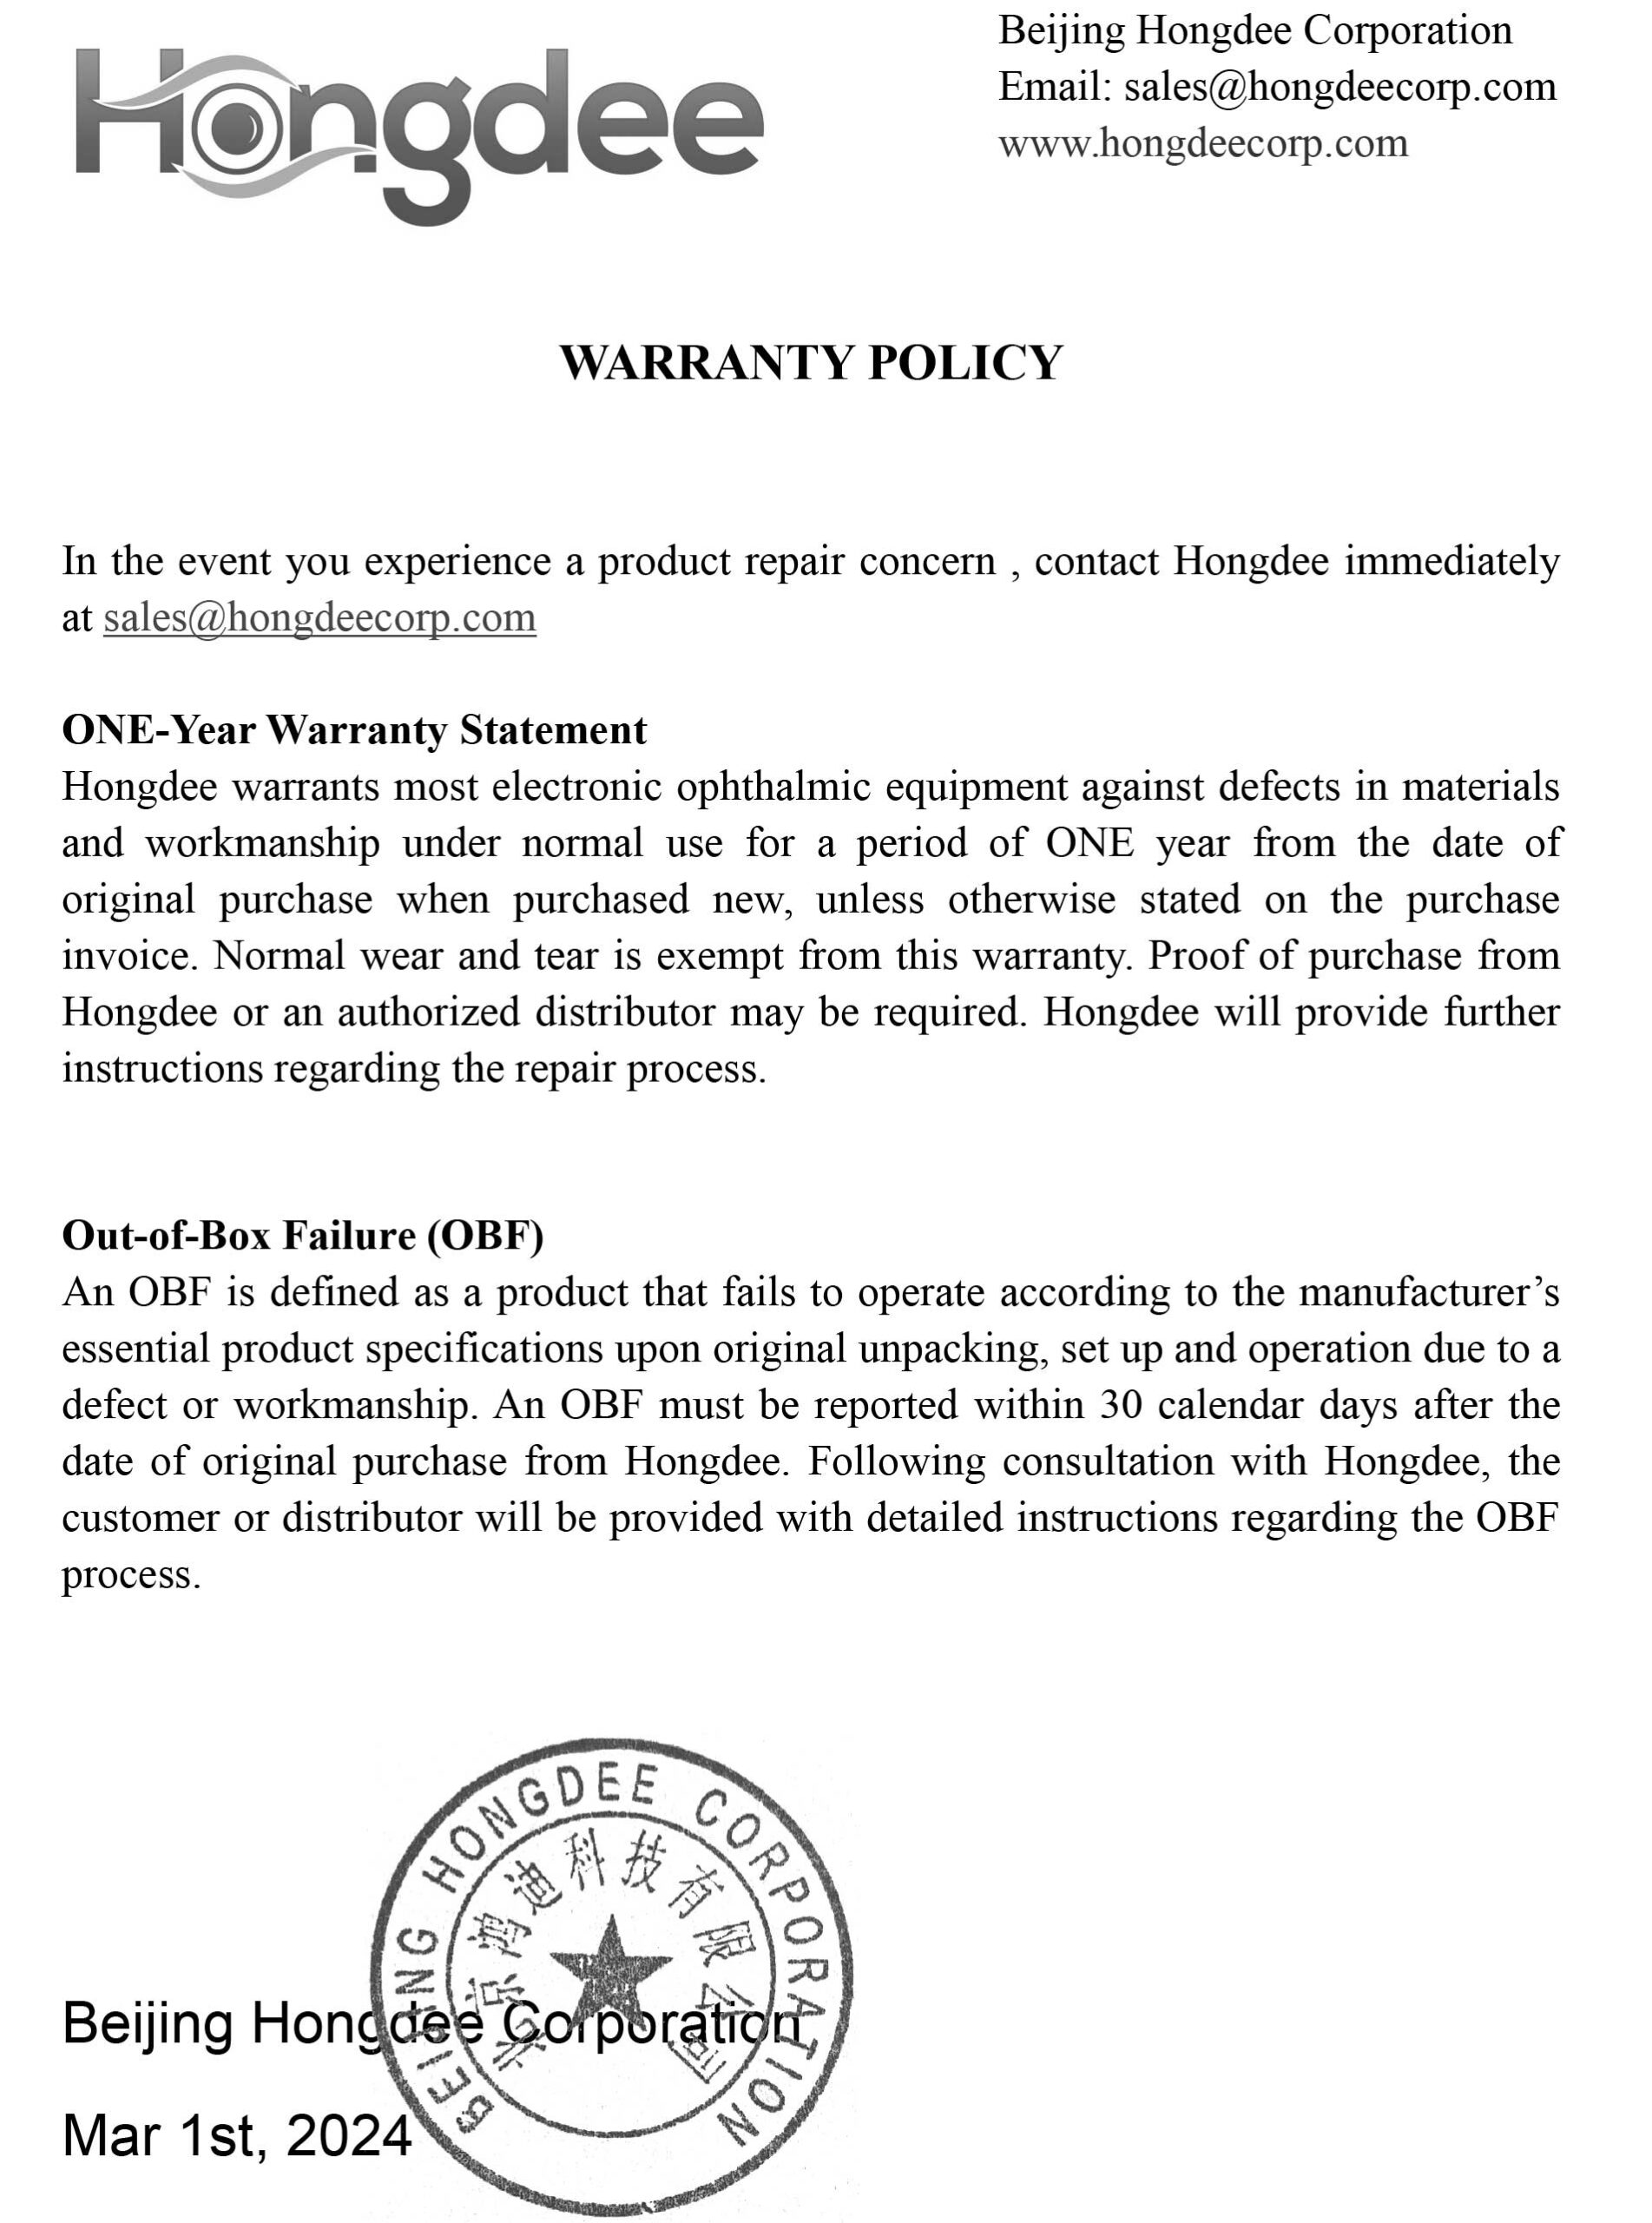 Hongdee-warranty-policy-2024